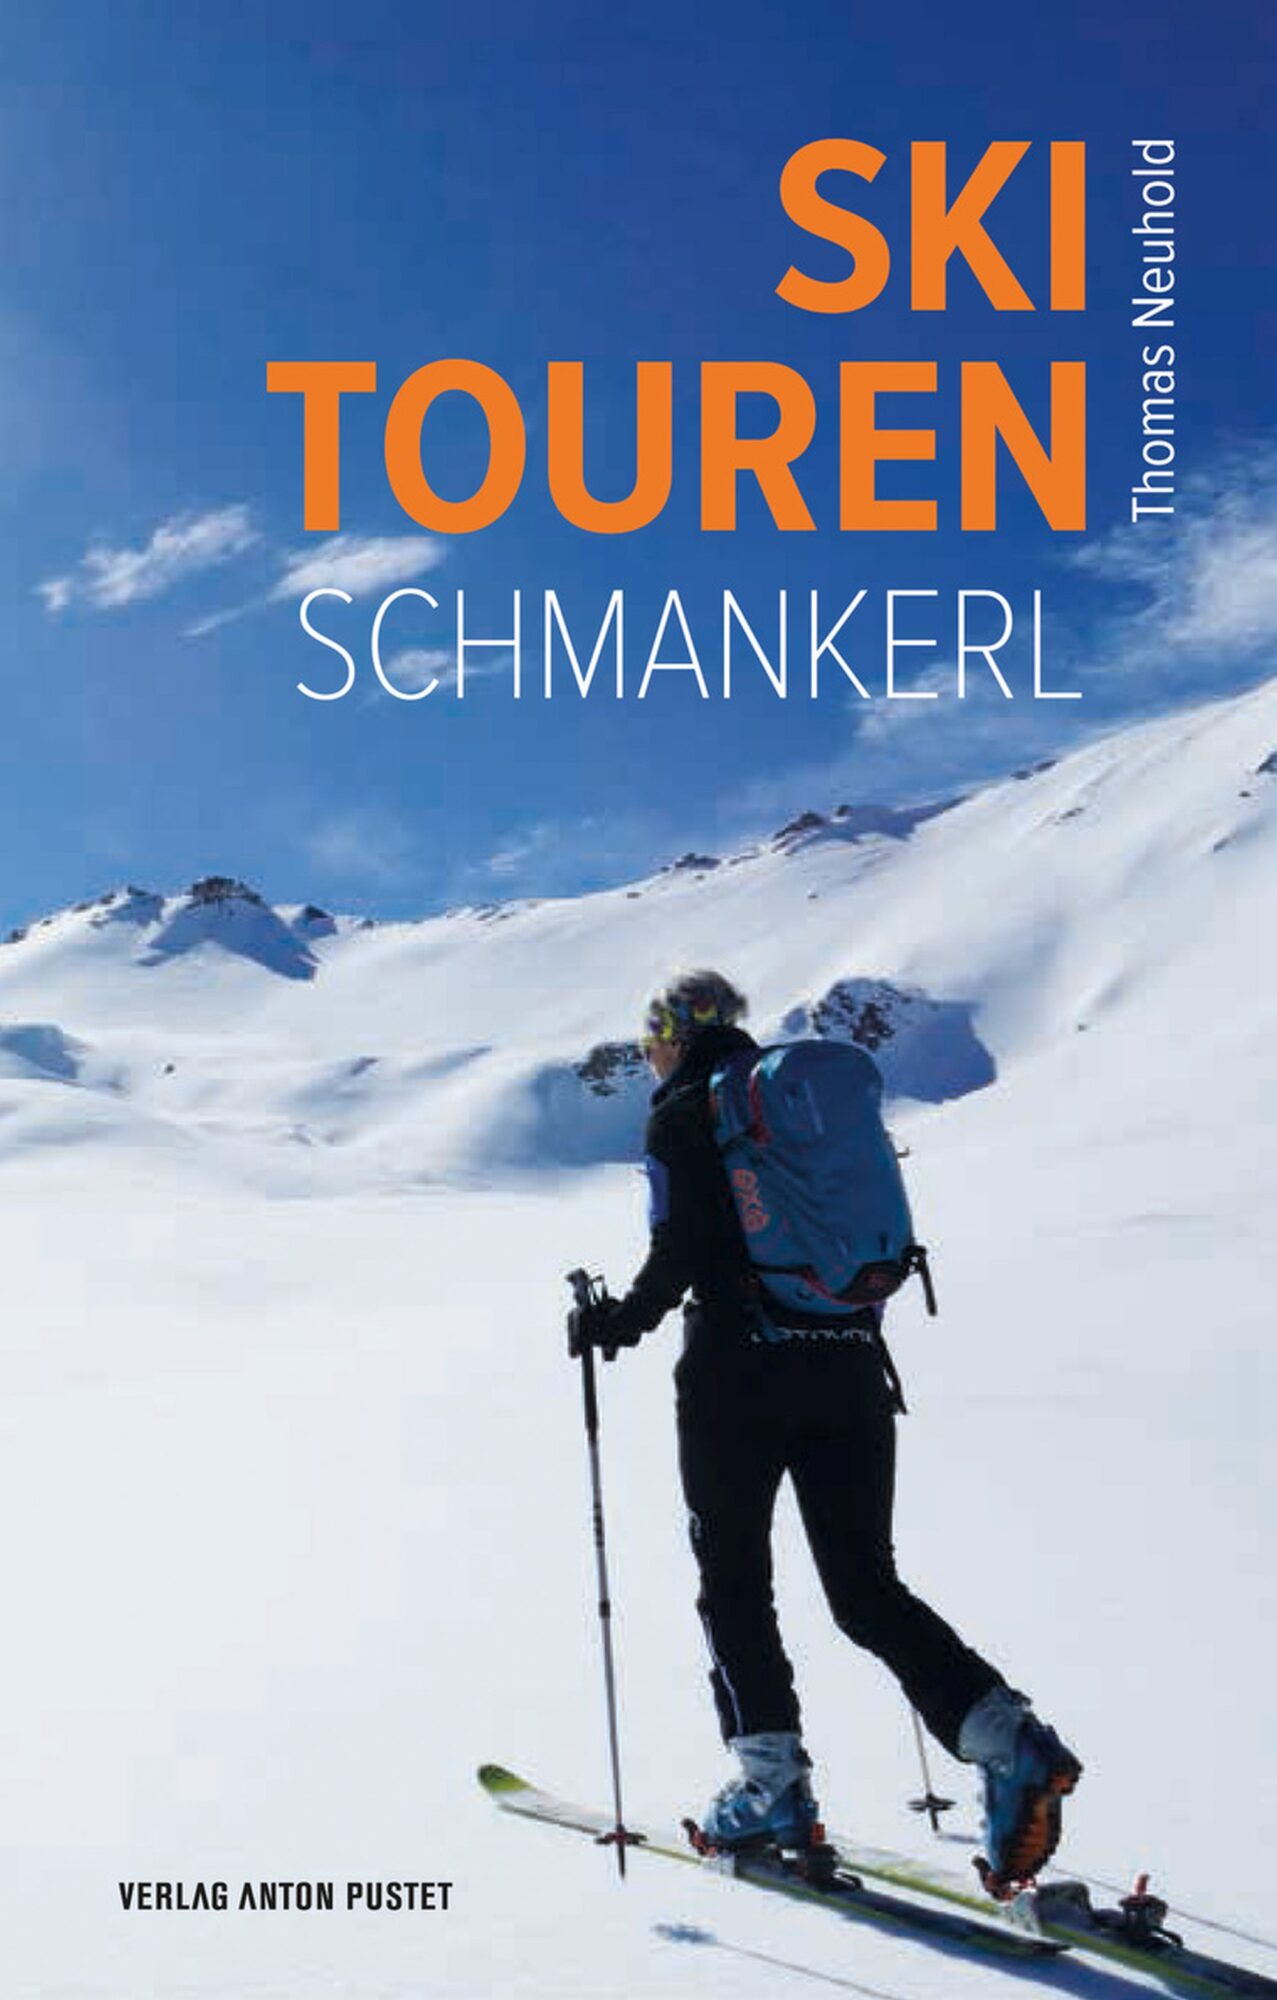 Cover Skitourenschmankerl (c) Verlag Anton Pustet